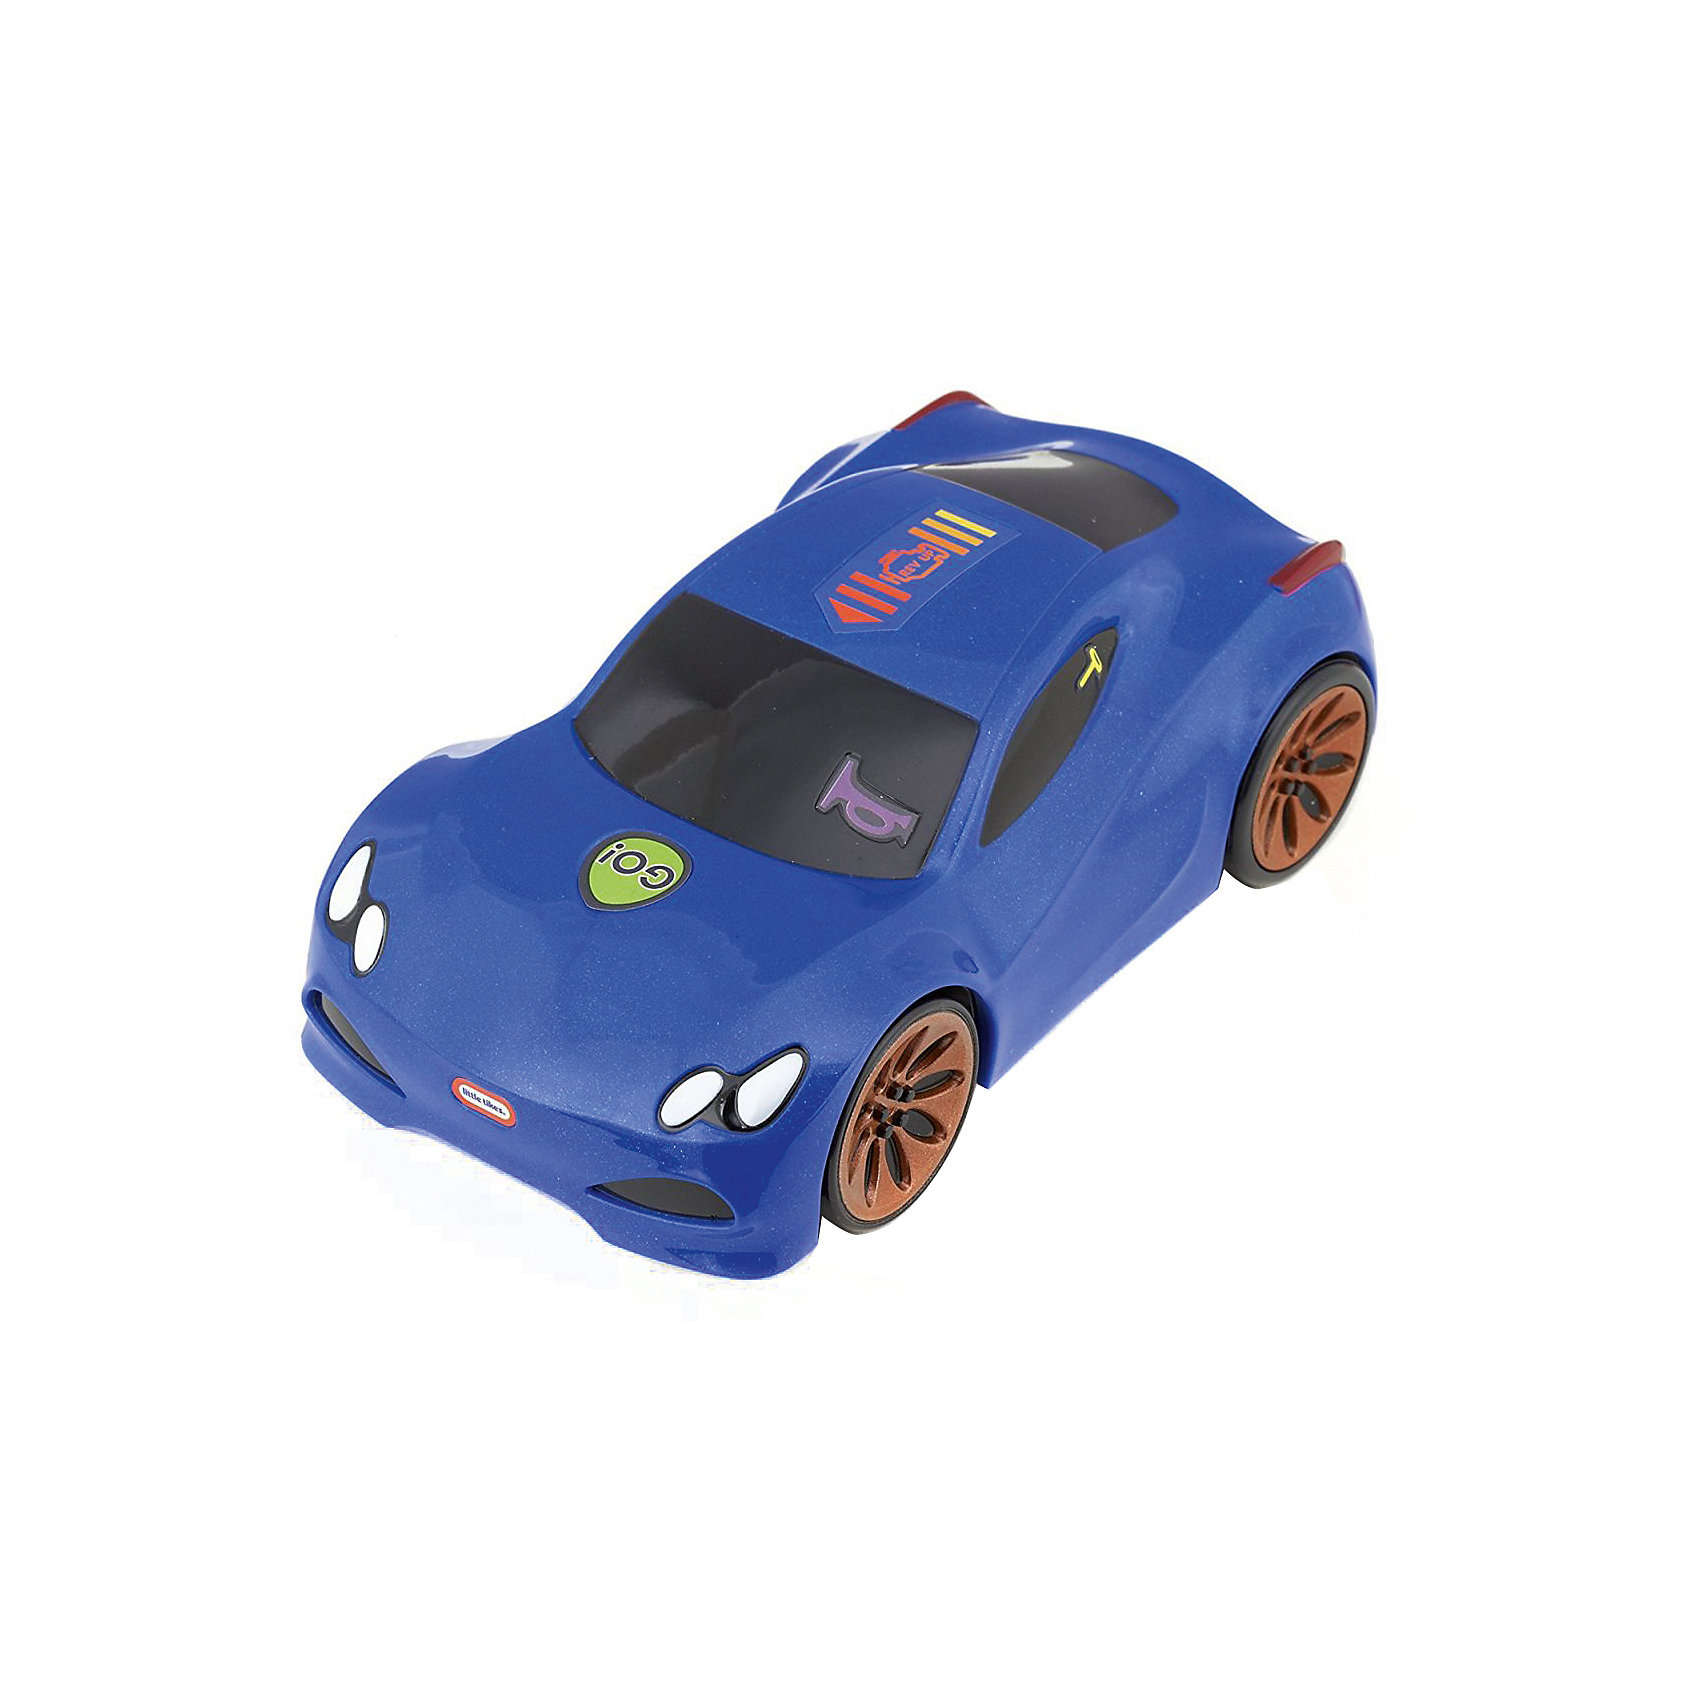 Спортивная машина "Легкий старт", синяя Little Tikes 11726604